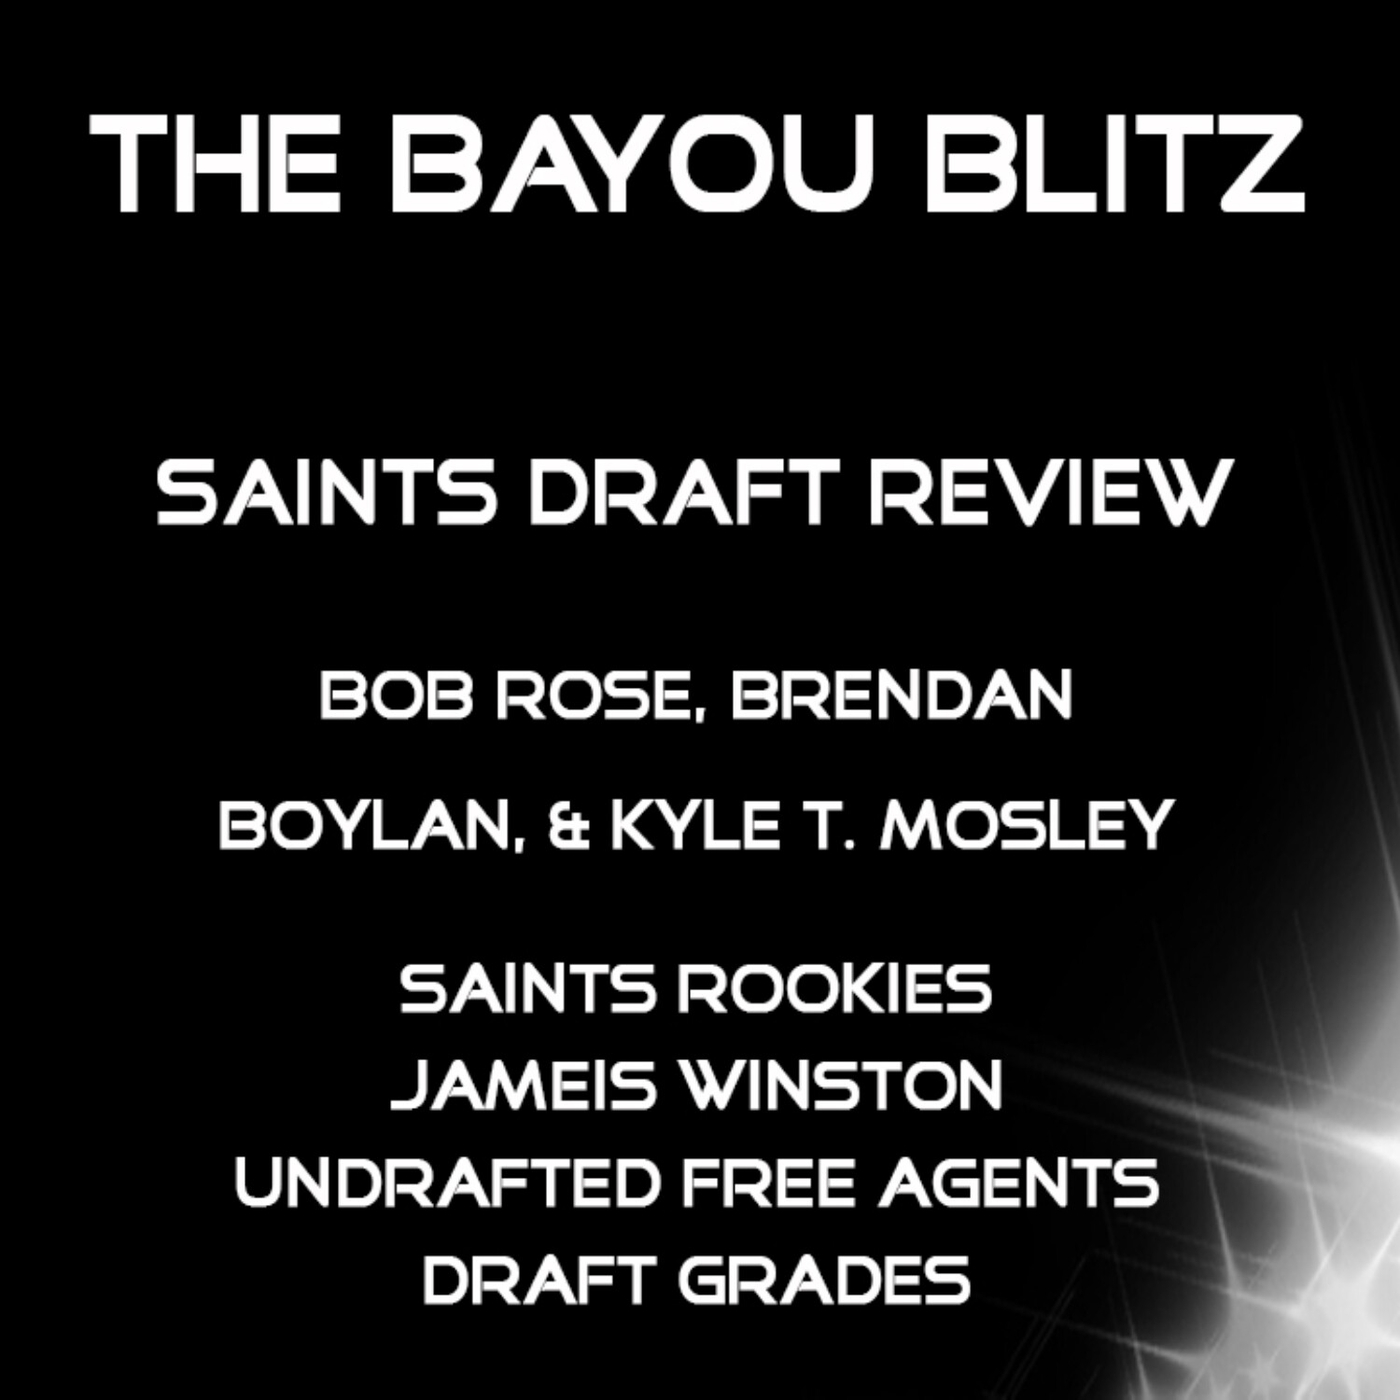 Bayou Blitz:  The Aftermath - 2020 Saints Draft Review